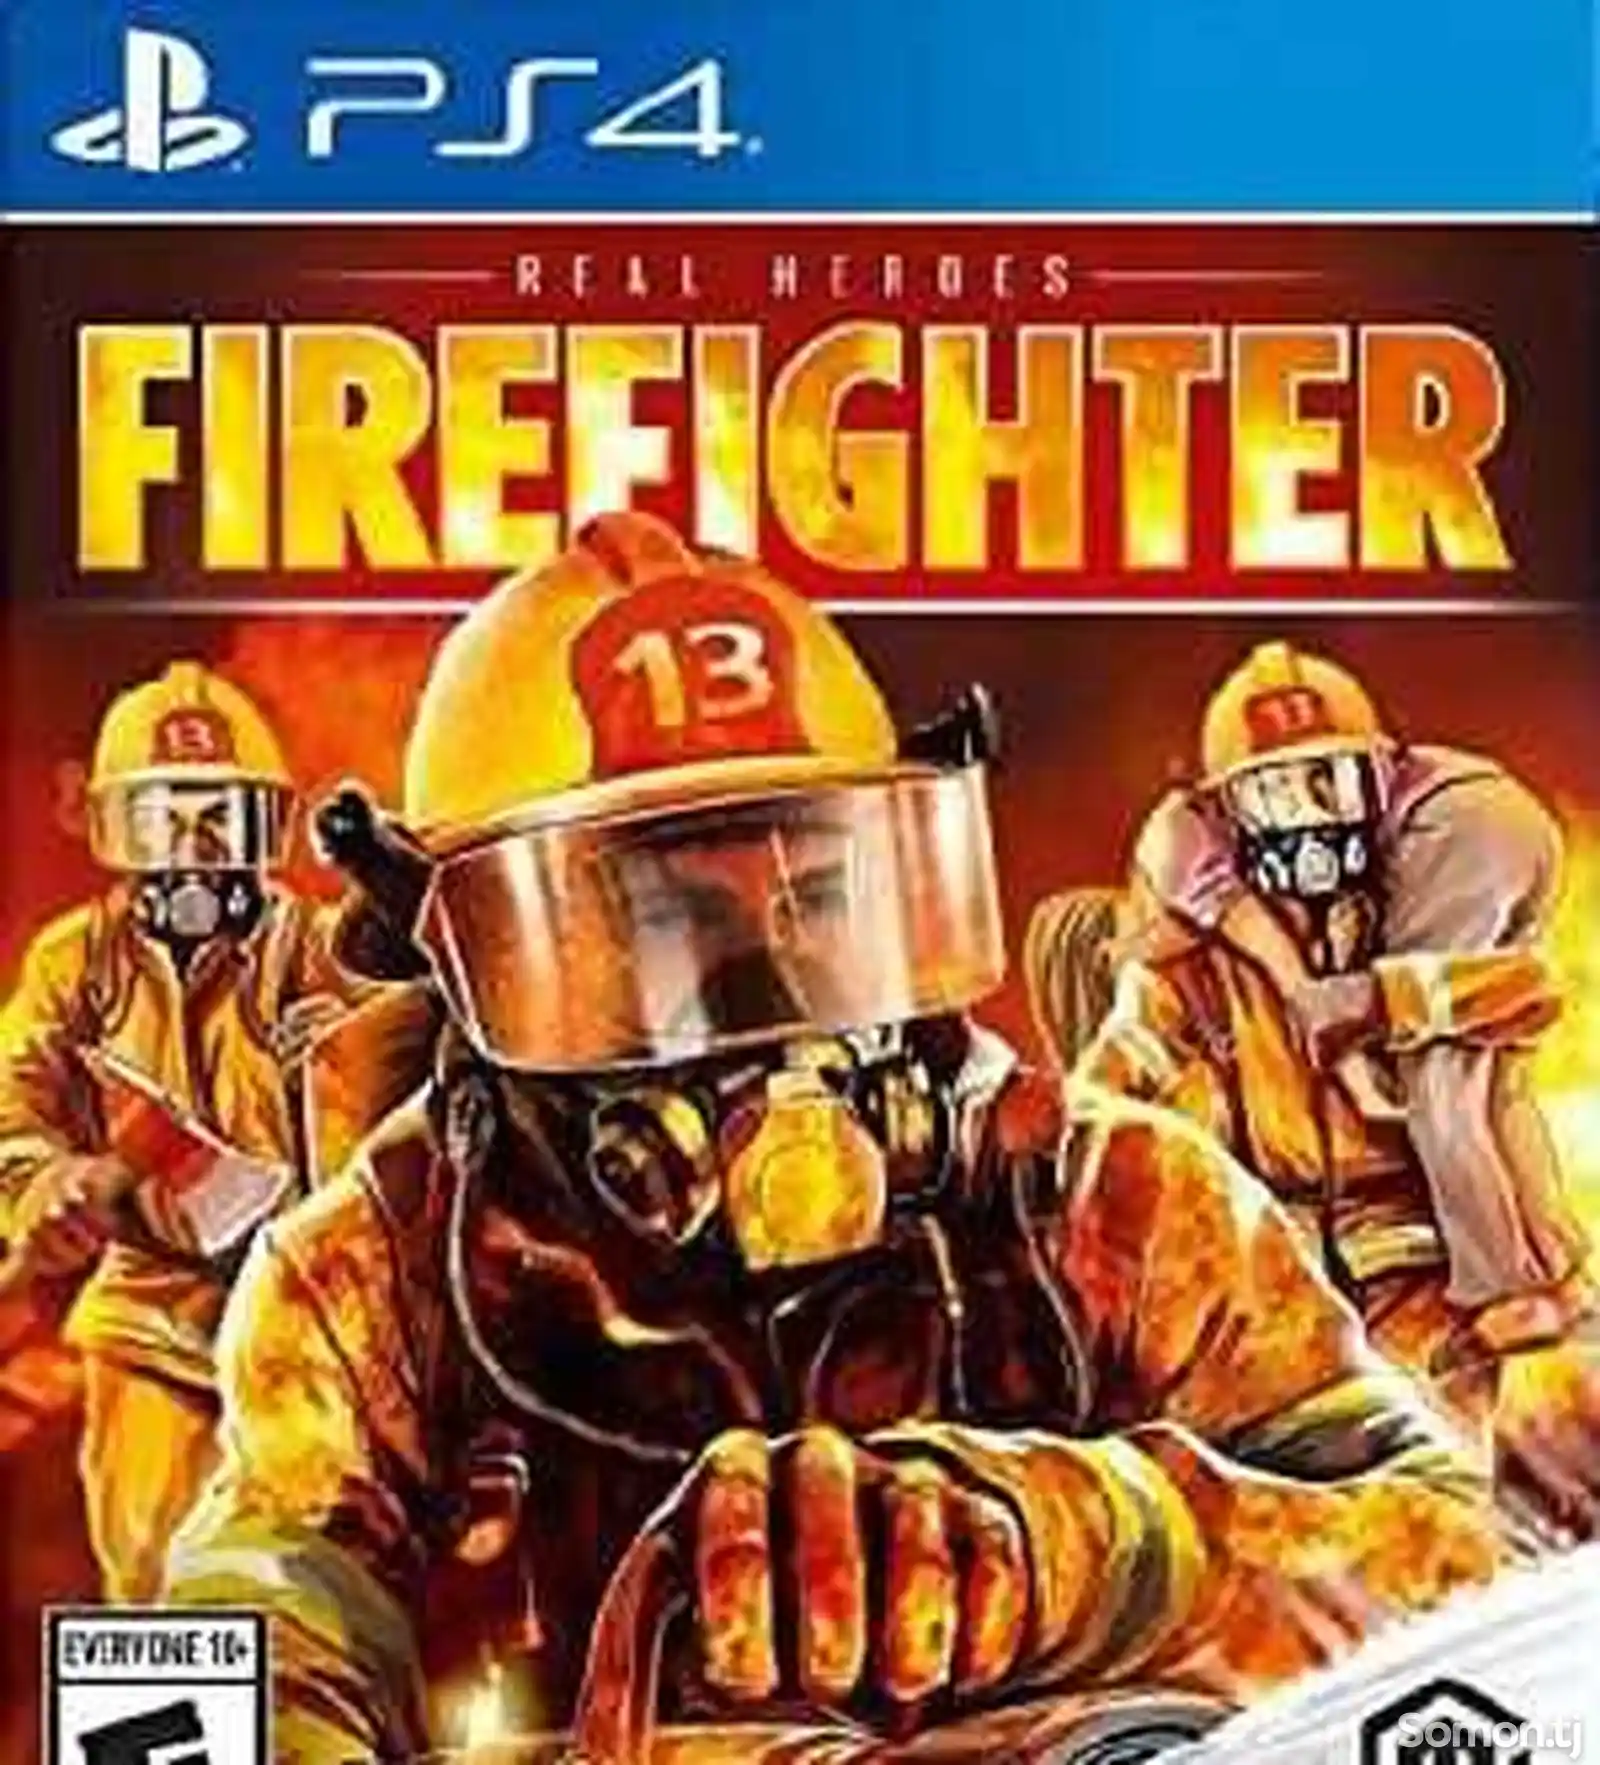 Игра Real heroes firefighter для PS-4 / 5.05 / 6.72 / 7.02 / 7.55 / 9.00 /-1